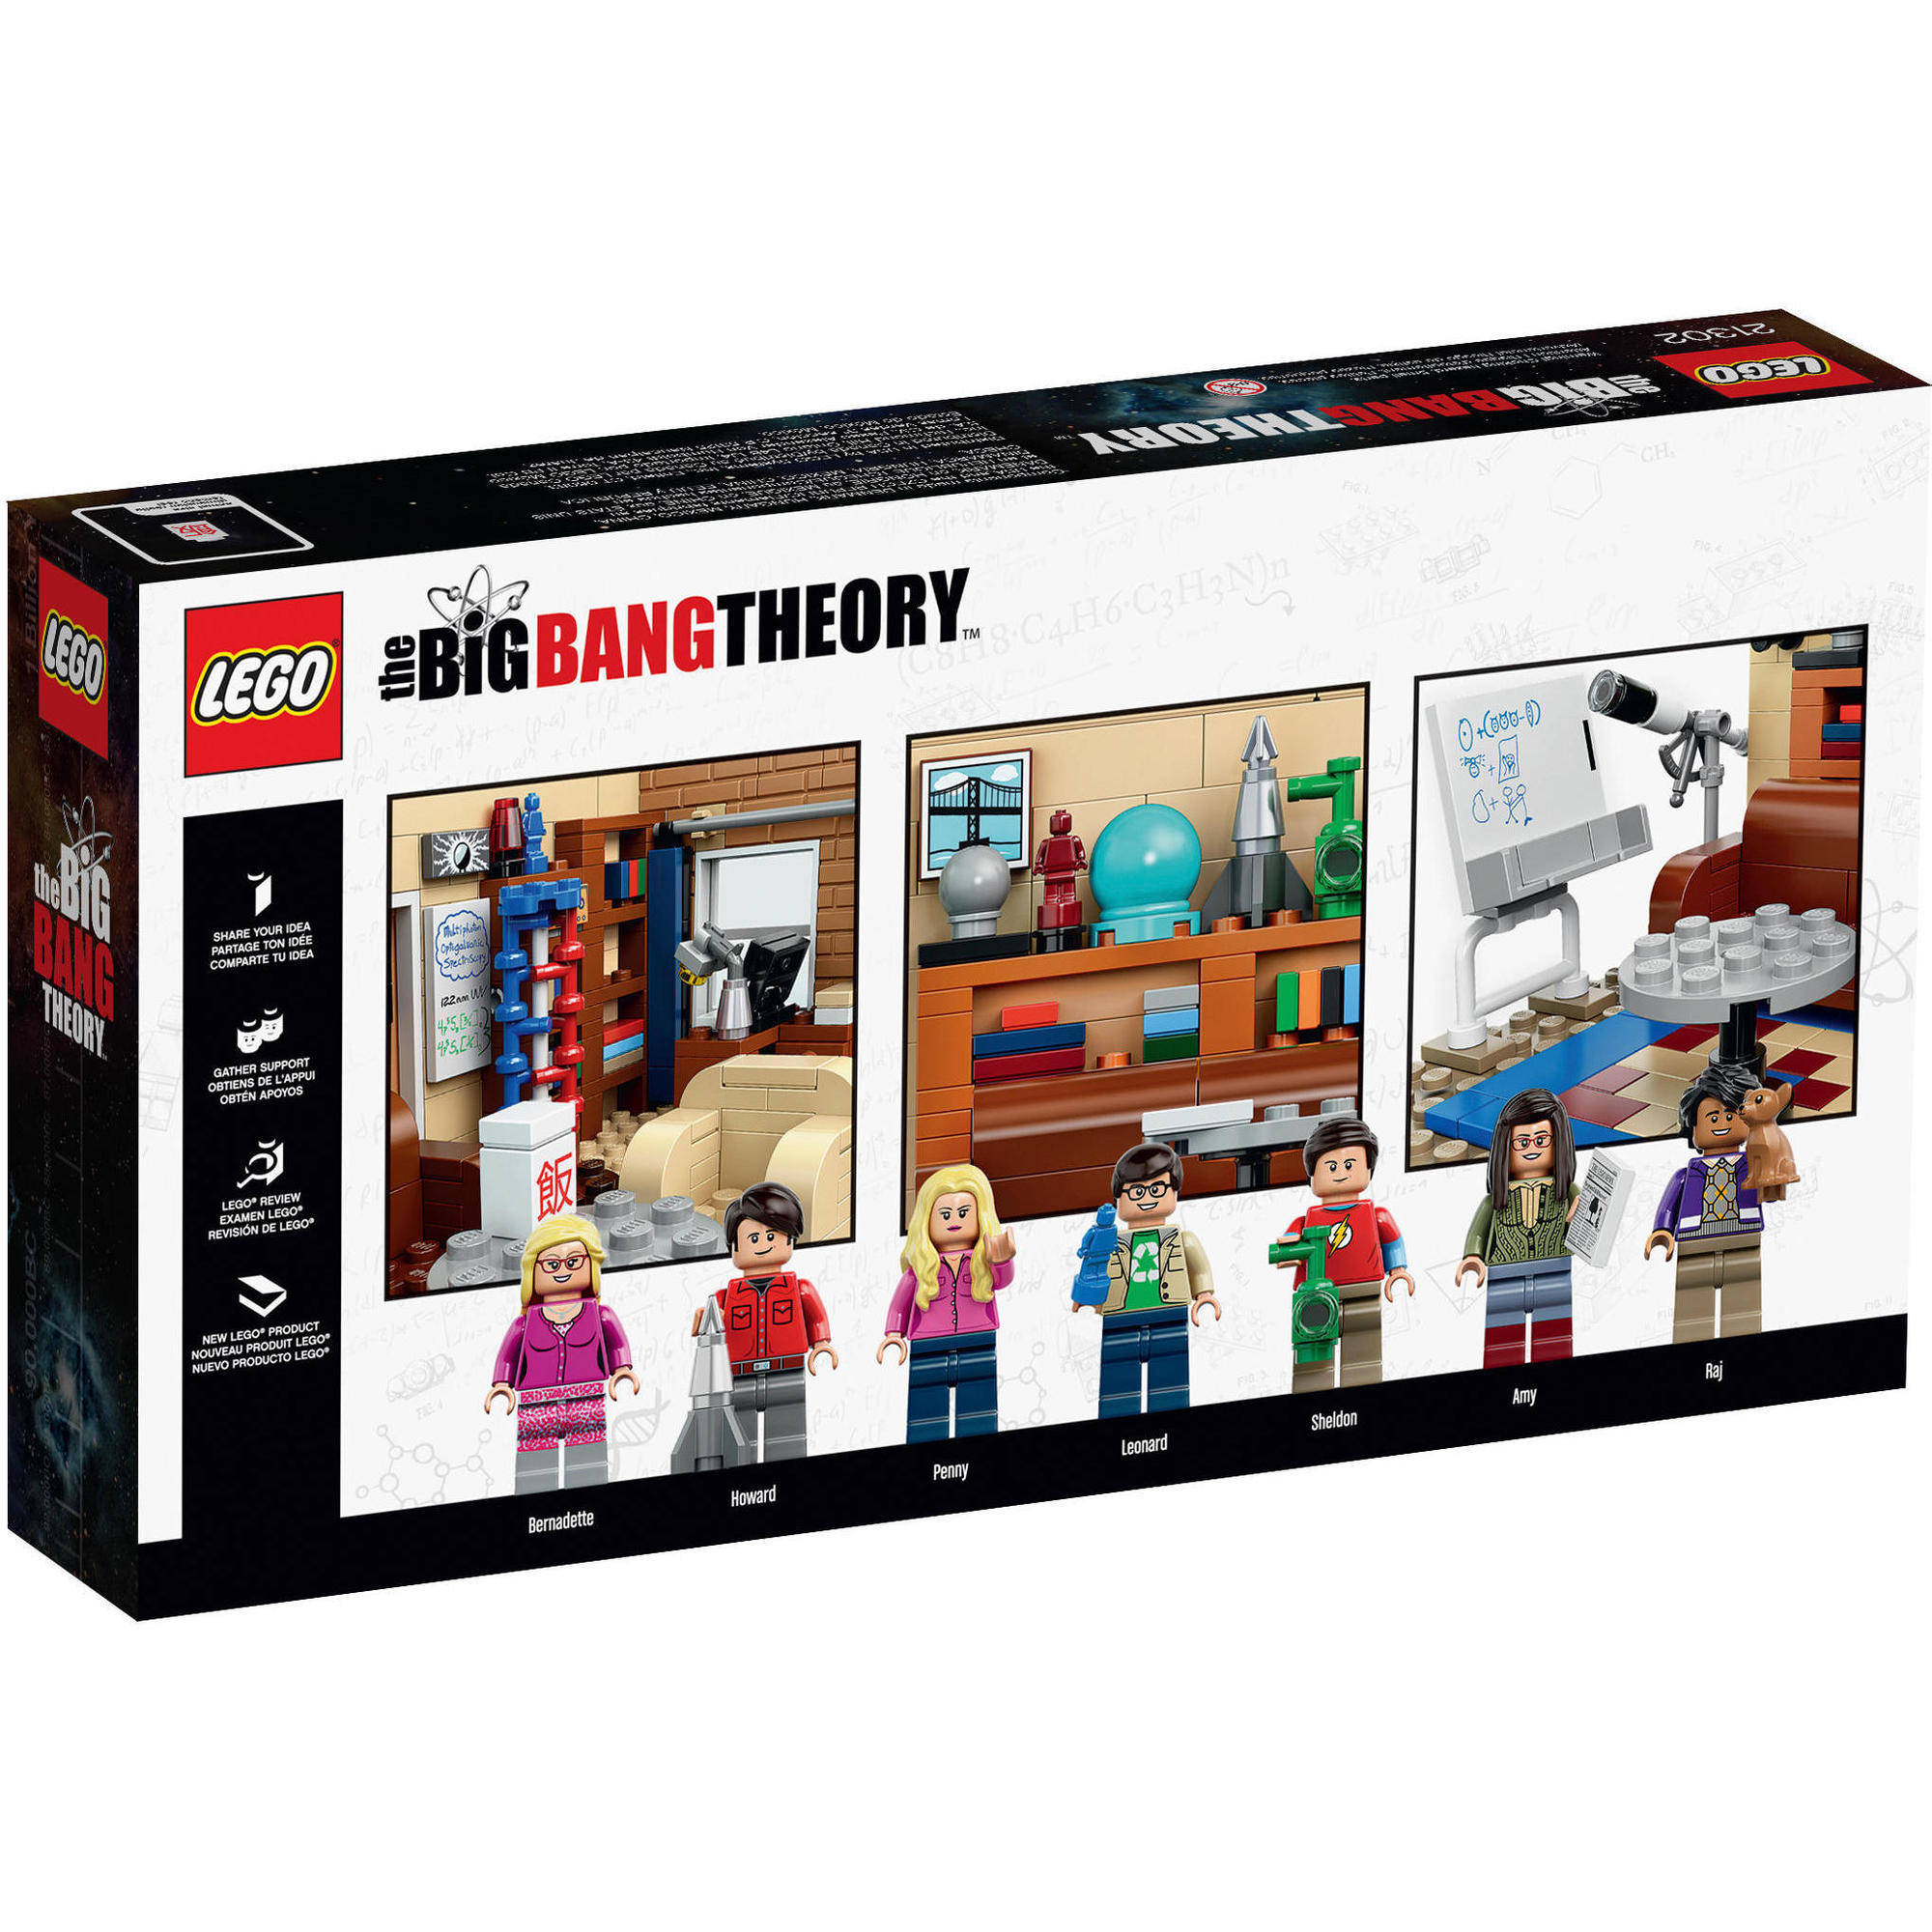 LEGO Ideas The Big Bang Theory, 21302 - image 3 of 6